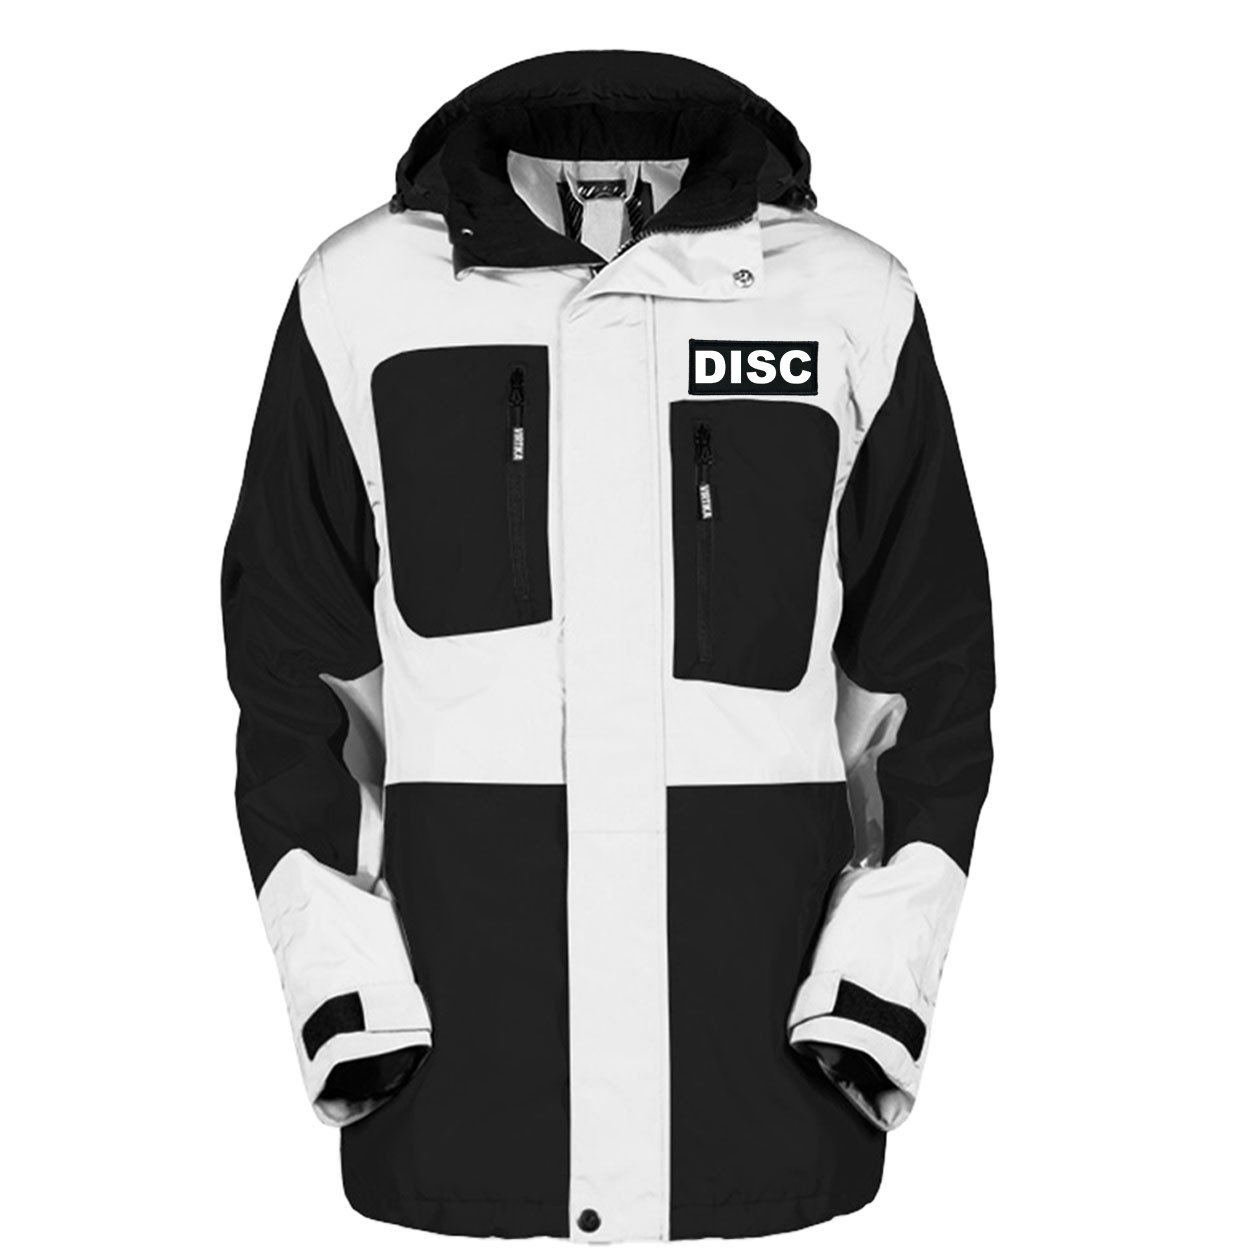 Disc Brand Logo Classic Woven Patch Pro Snowboard Jacket (Black/White)